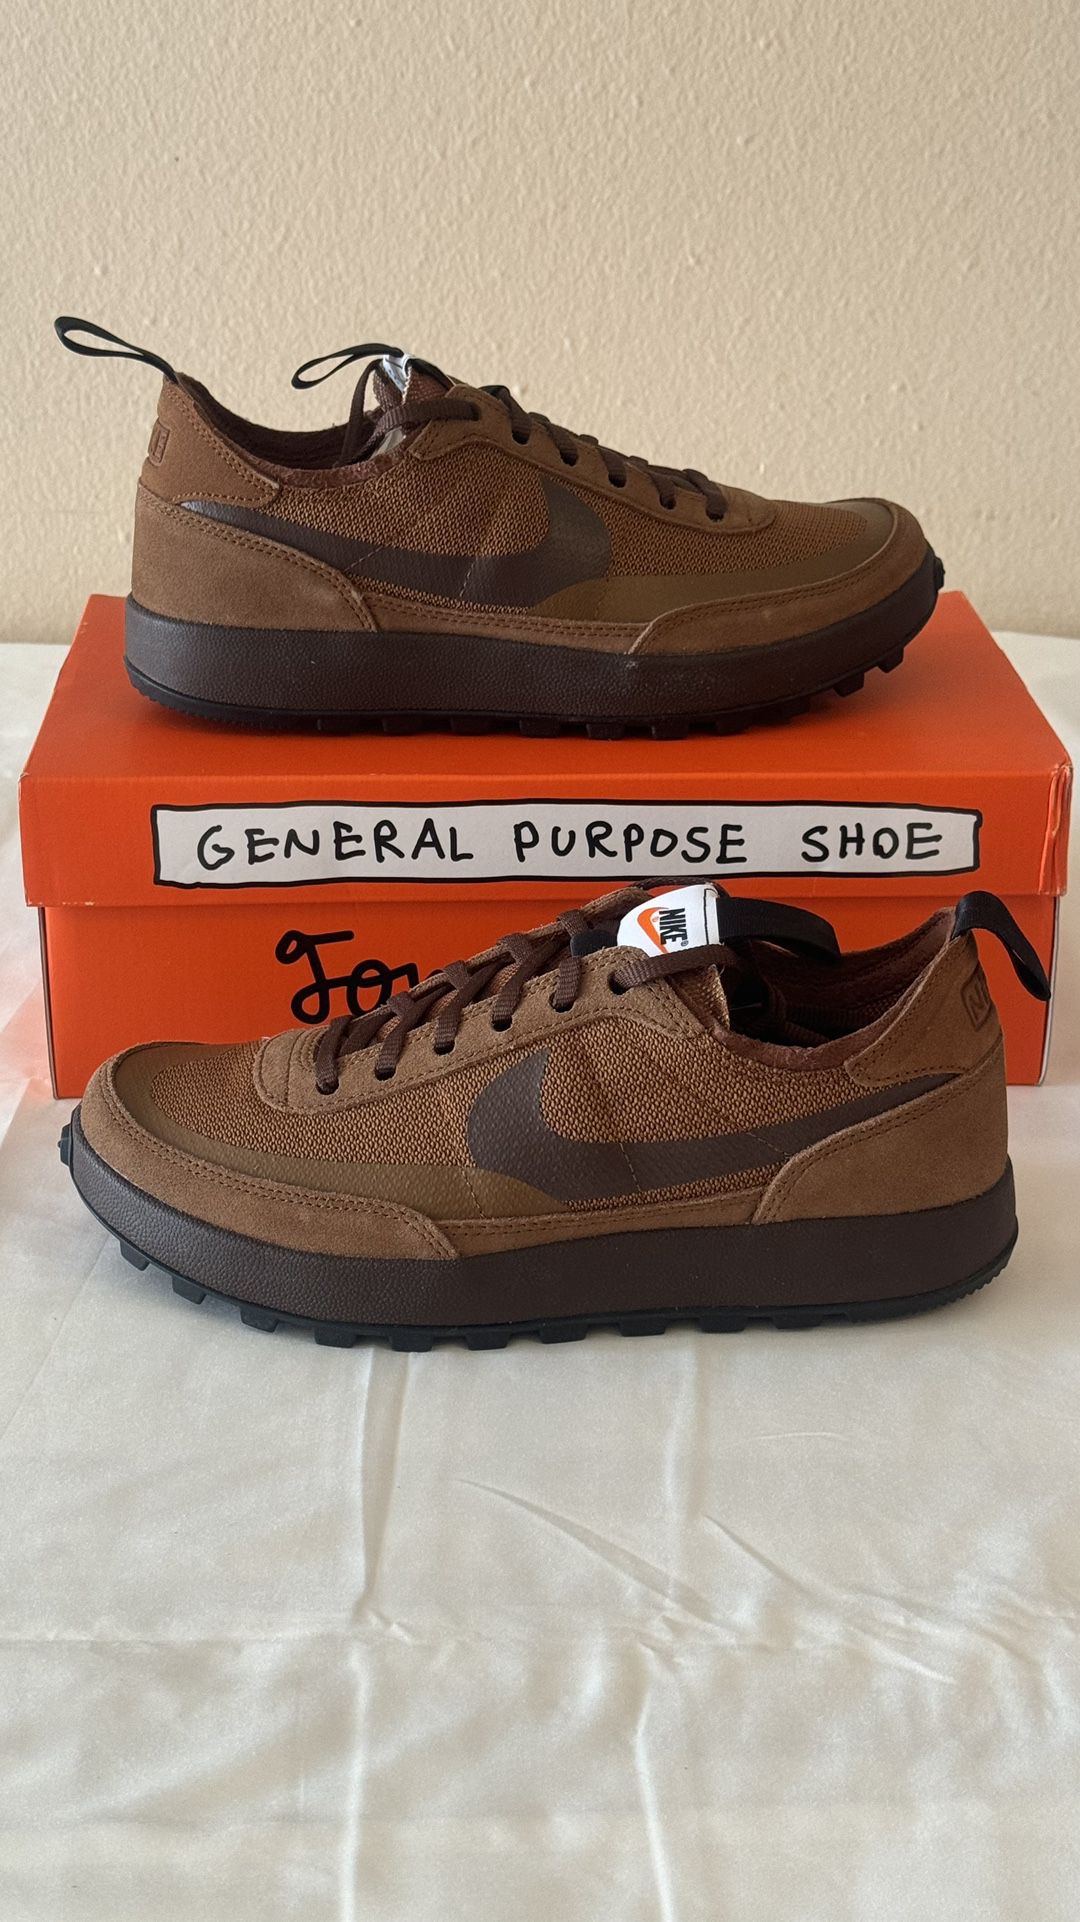 Nike- General Purpose Shoe